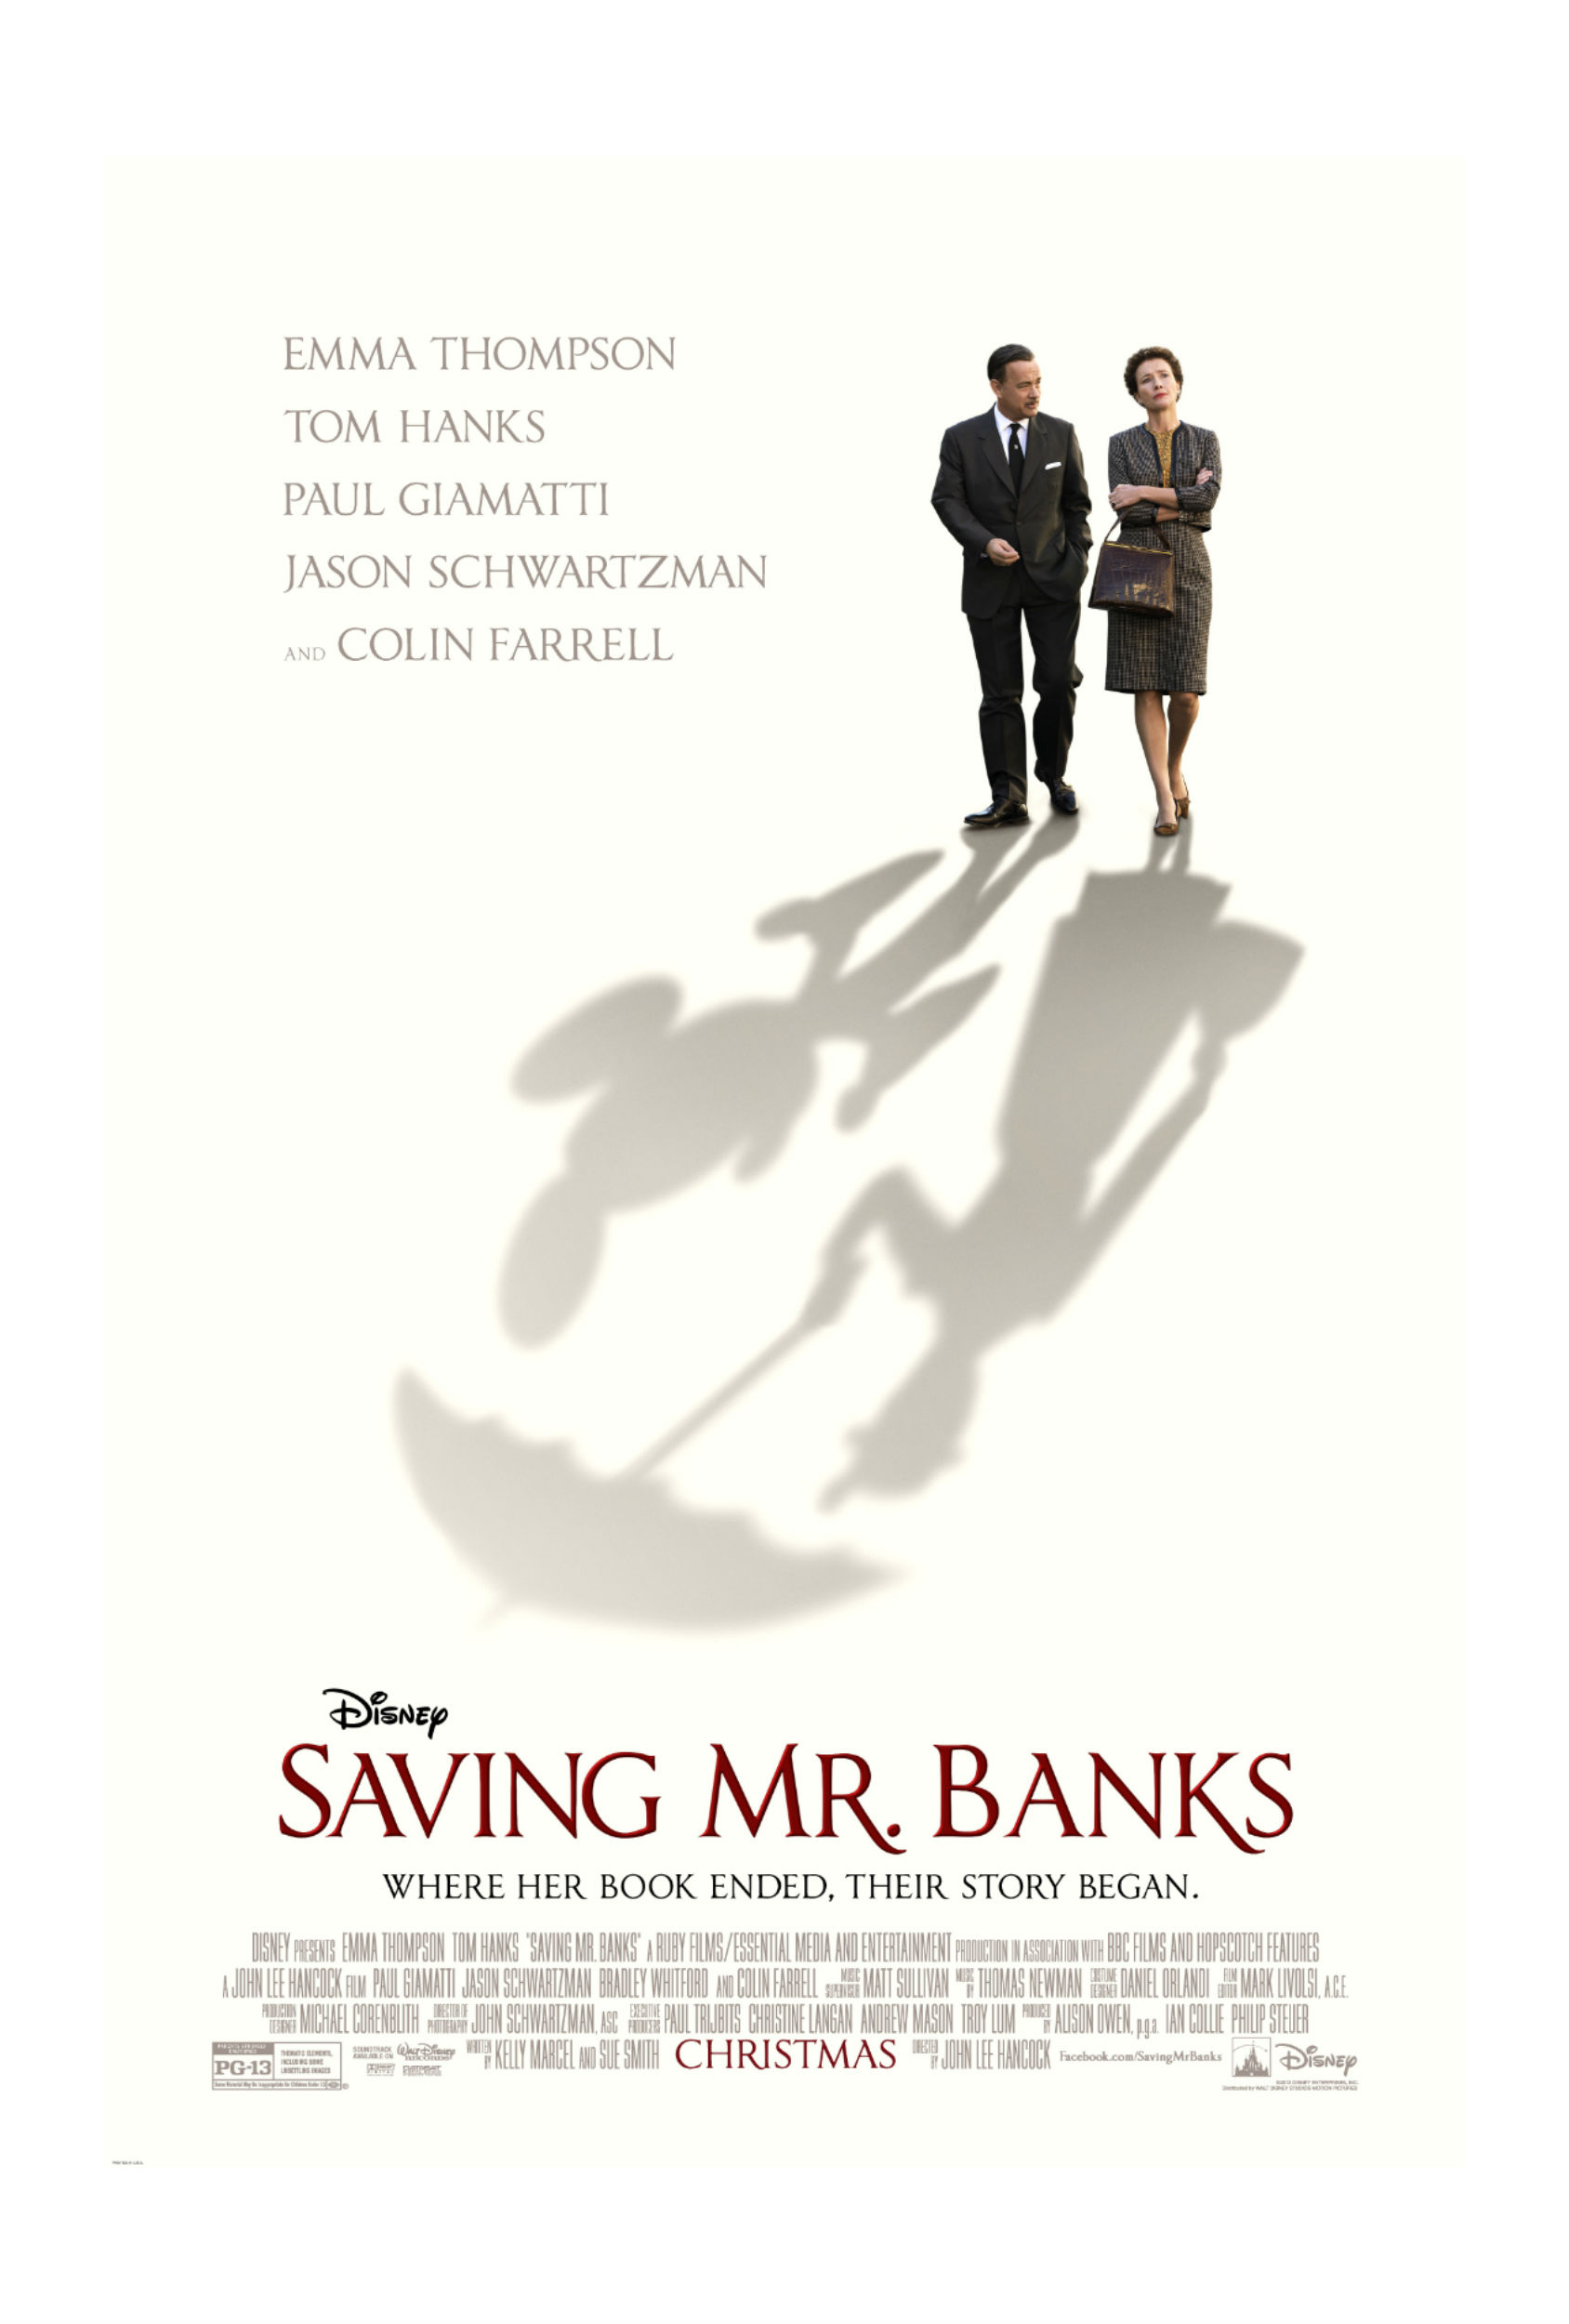 Disney’s “SAVING MR. BANKS” New Trailer! #SavingMrBanks